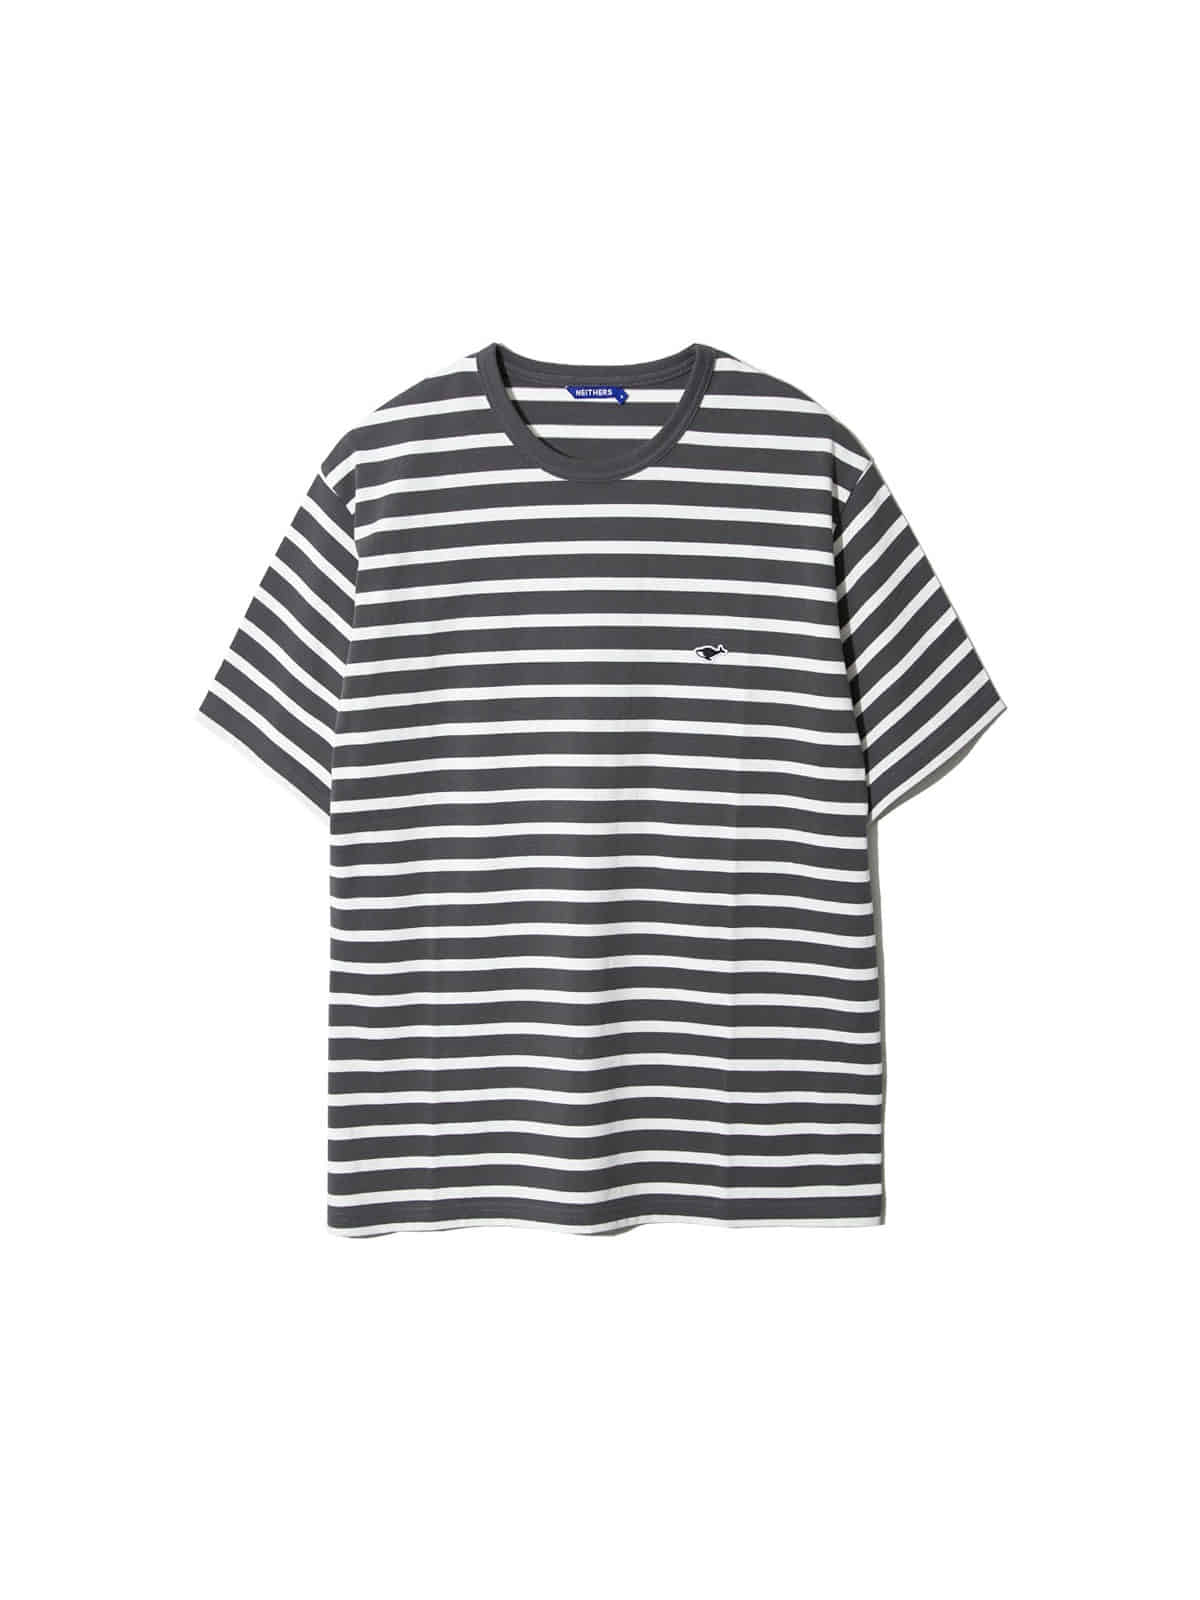 Basic Stripe S/S T-Shirt (Charcoal Stripe)